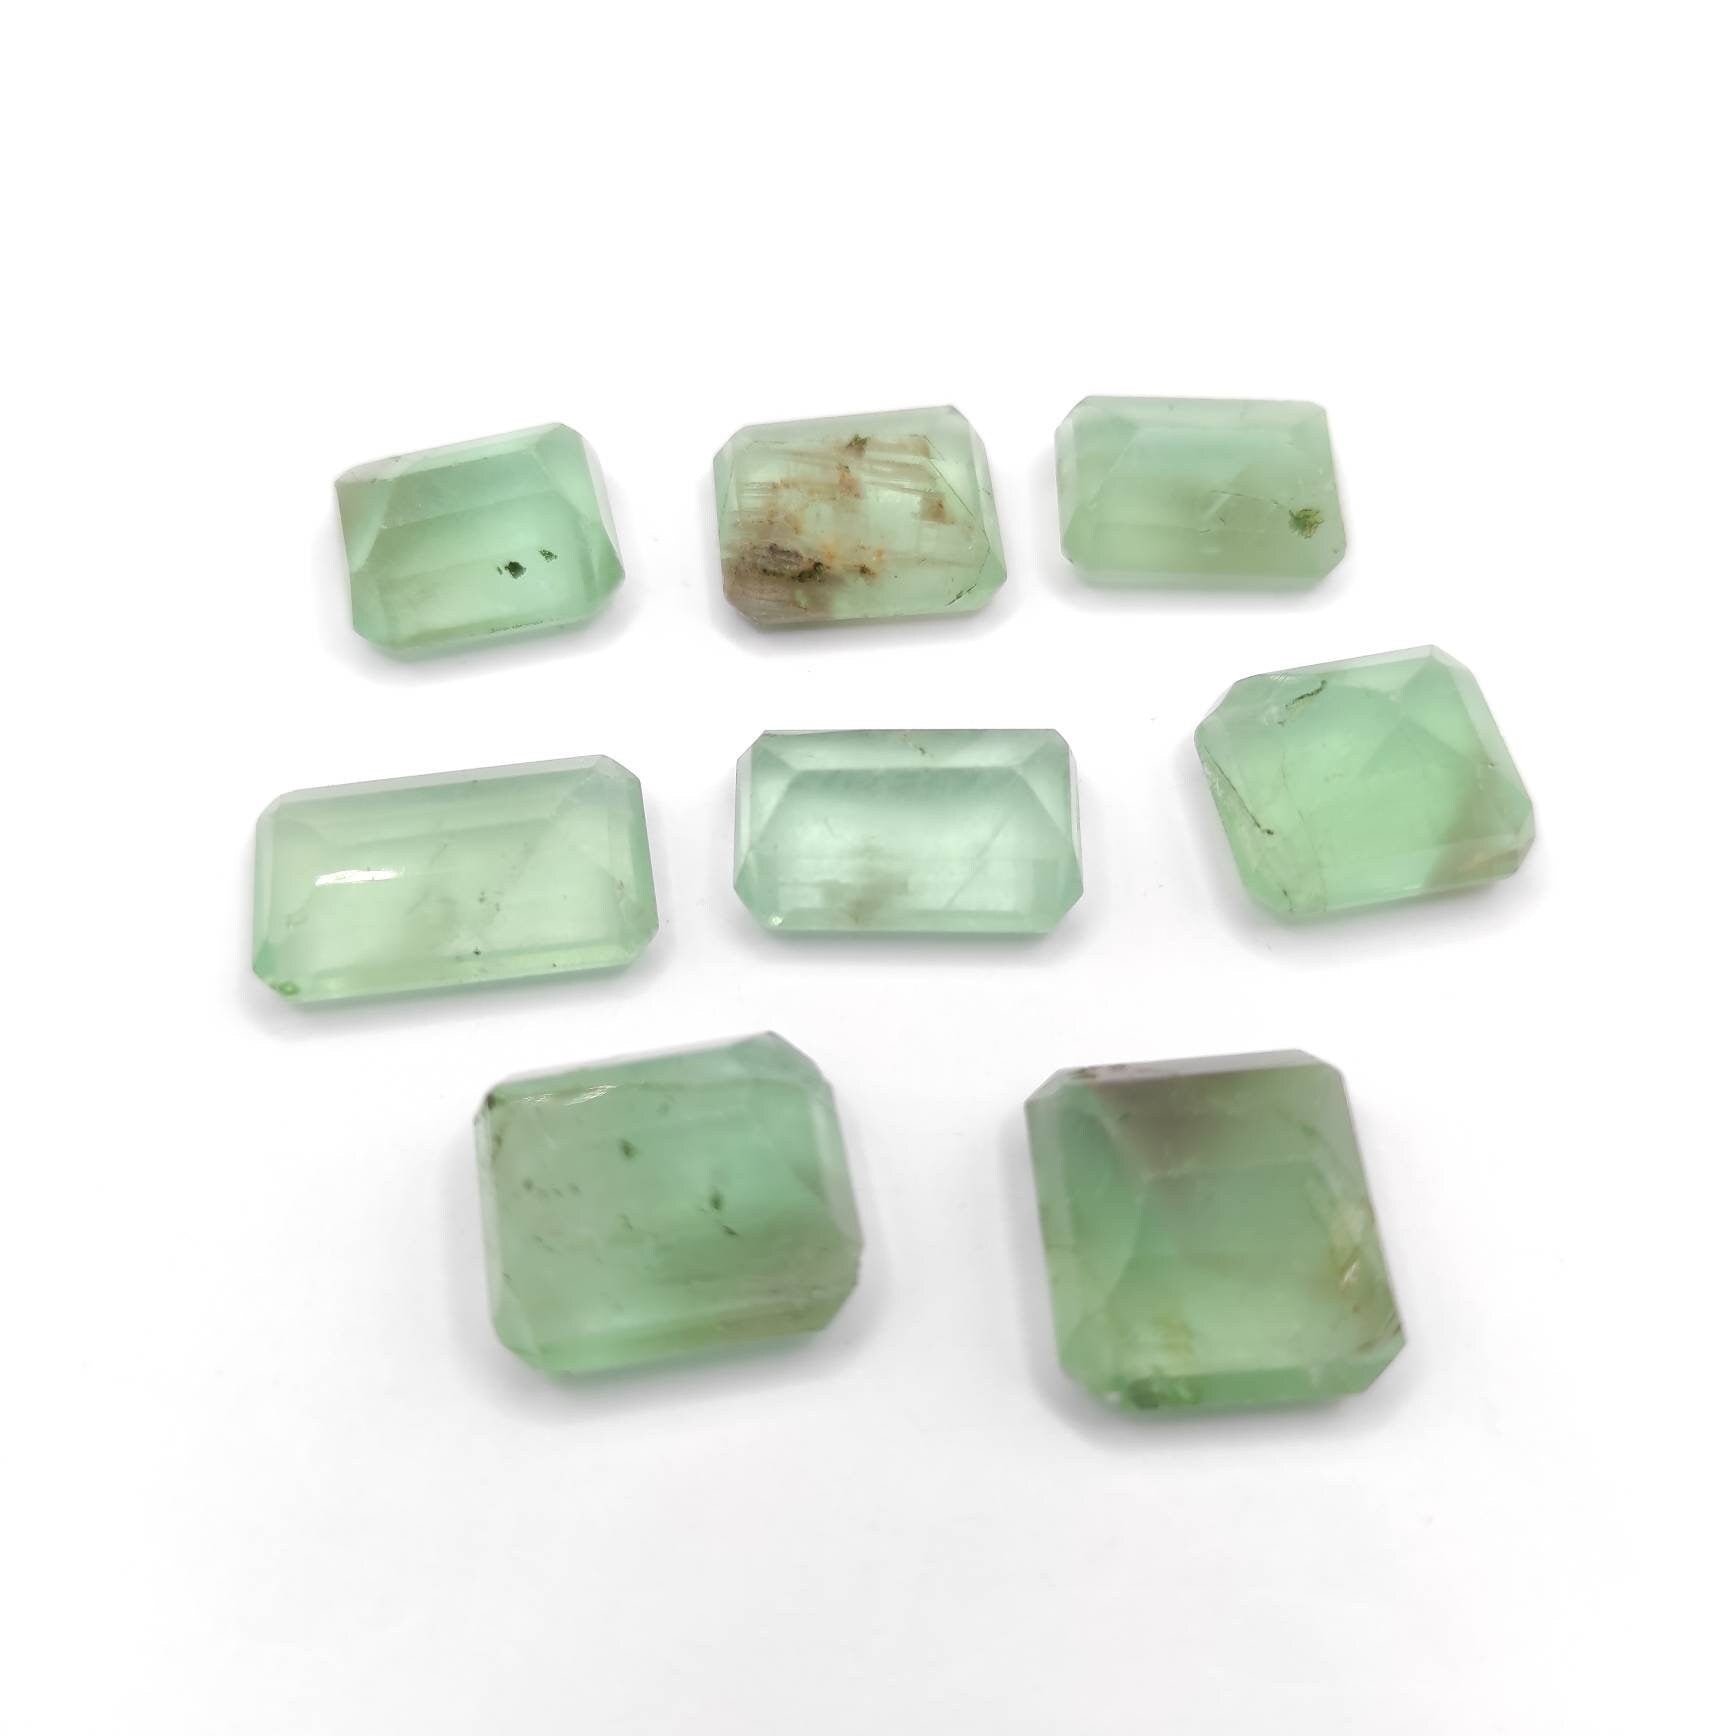 96ct 8pc Lot of Fluorite - Faceted Fluorite Gemstones - Pakistan Green Fluorite Cut Gems - Natural Fluorite Loose Stones - Loose Gemstones